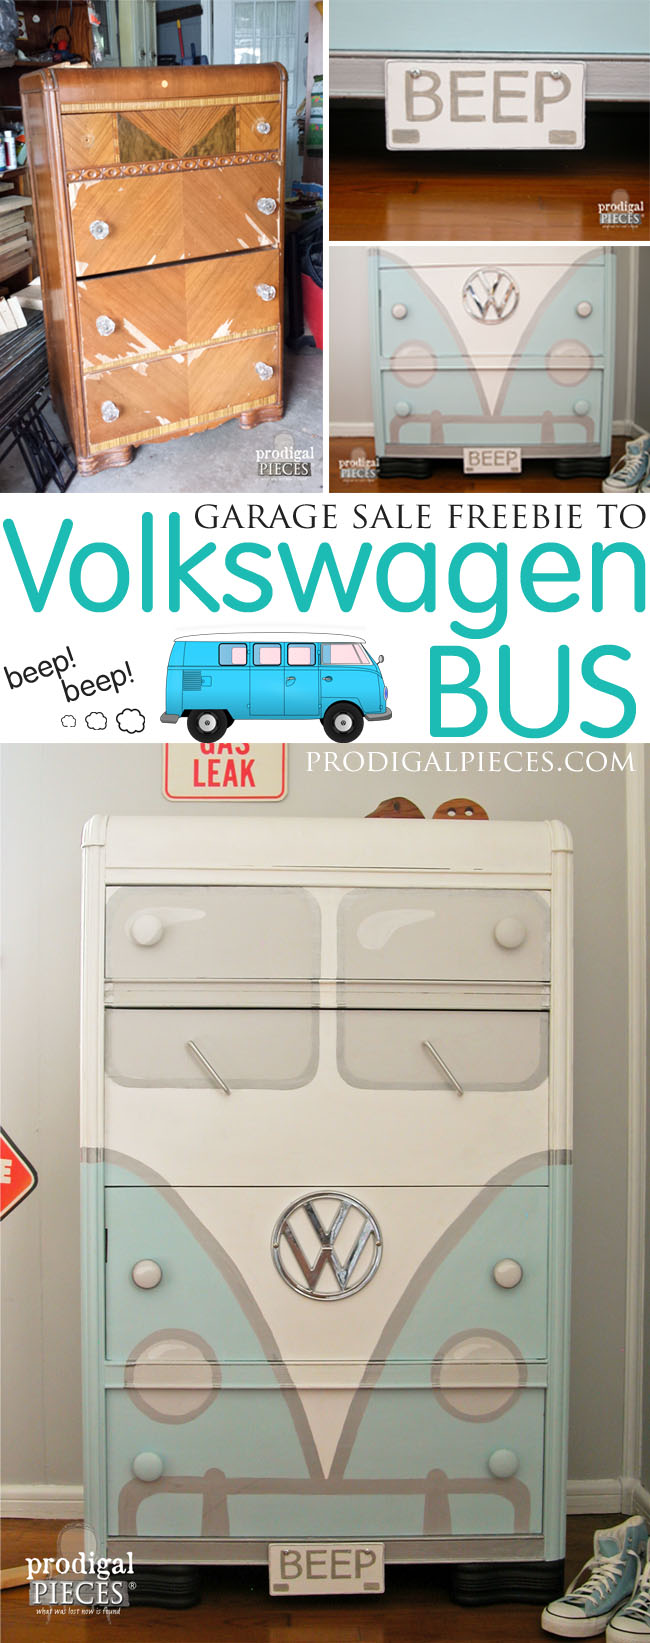 A garage sale freebie Art Deco water dresser gets a Volkswagen Bus makeover by Prodigal Pieces www.prodigalpieces.com